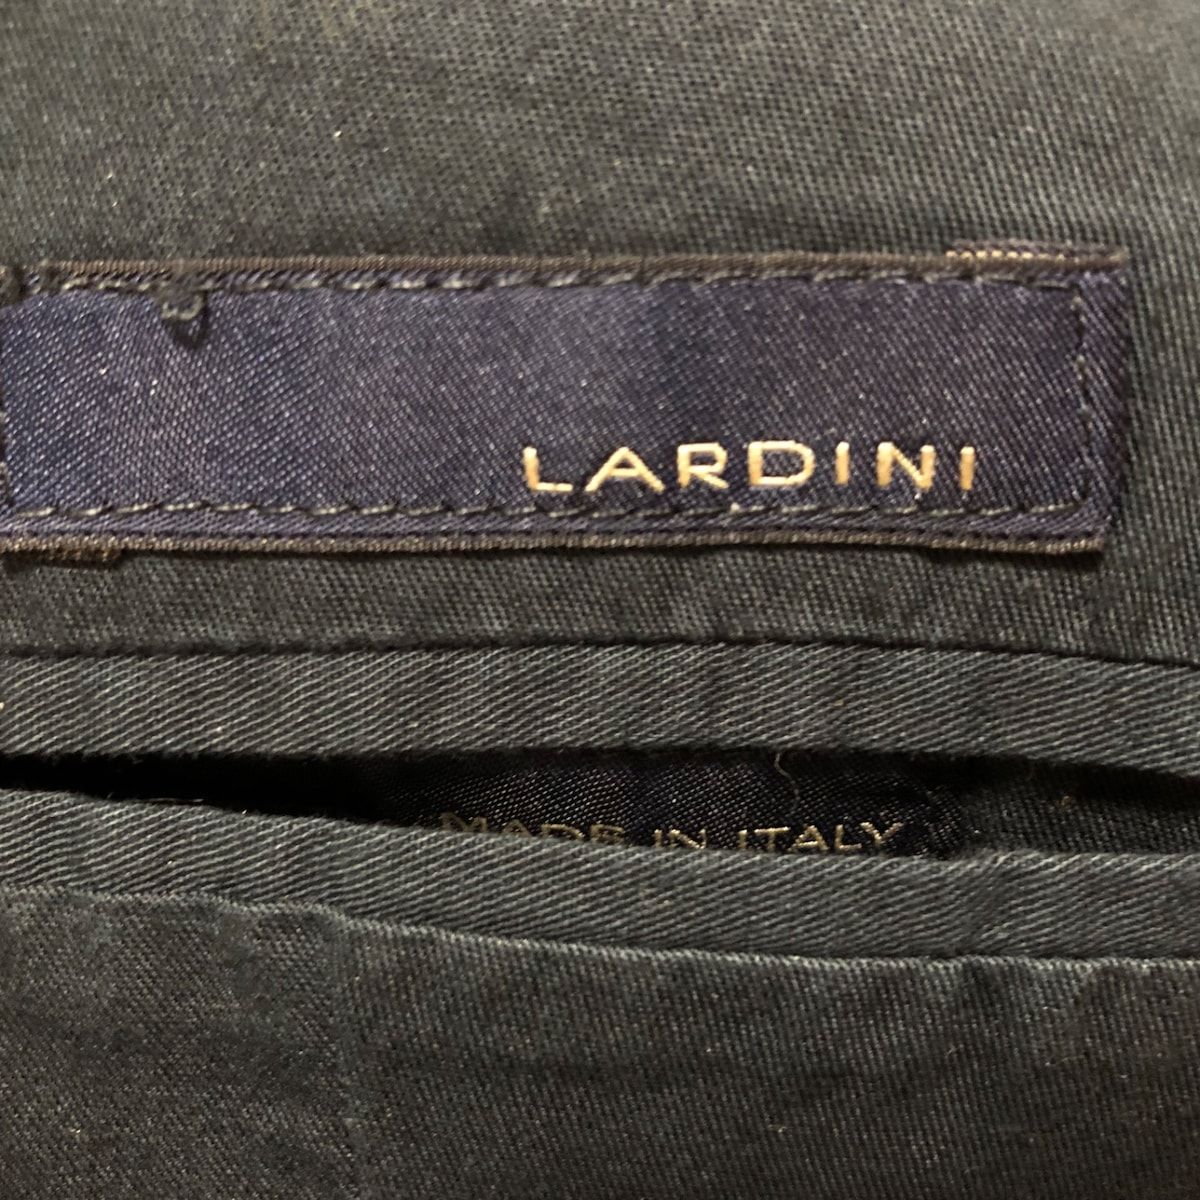 lardini(ラルディーニ) ベスト サイズ48 XL メンズ - ダークネイビー 